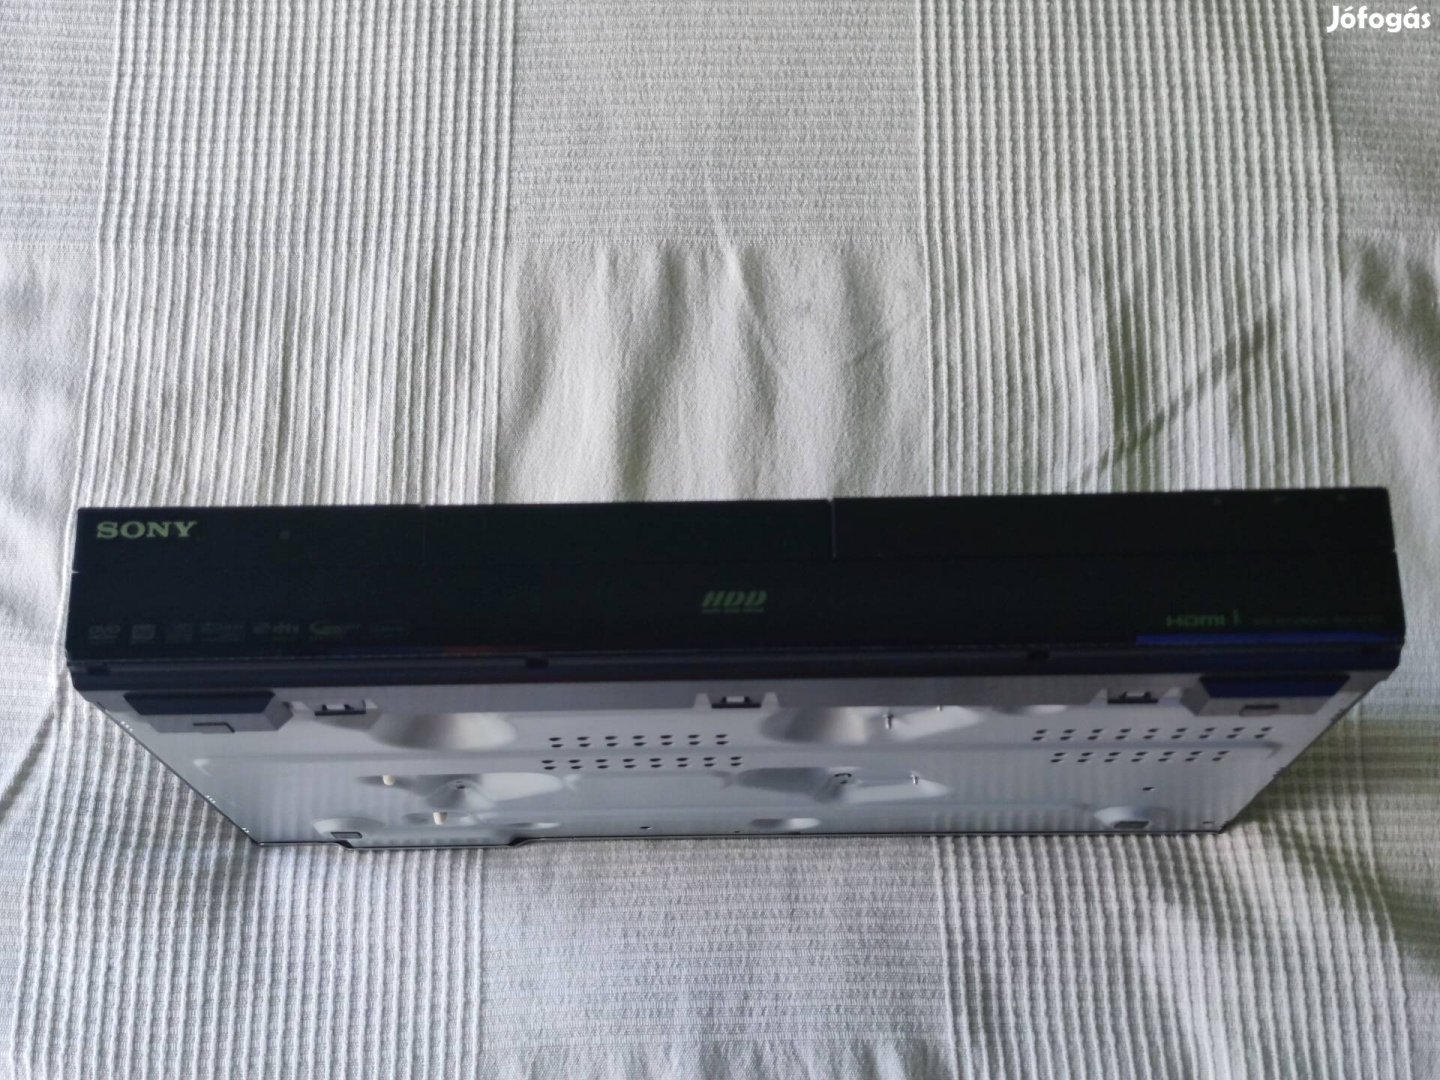 Sony DVD Recorder RDR-AT105 